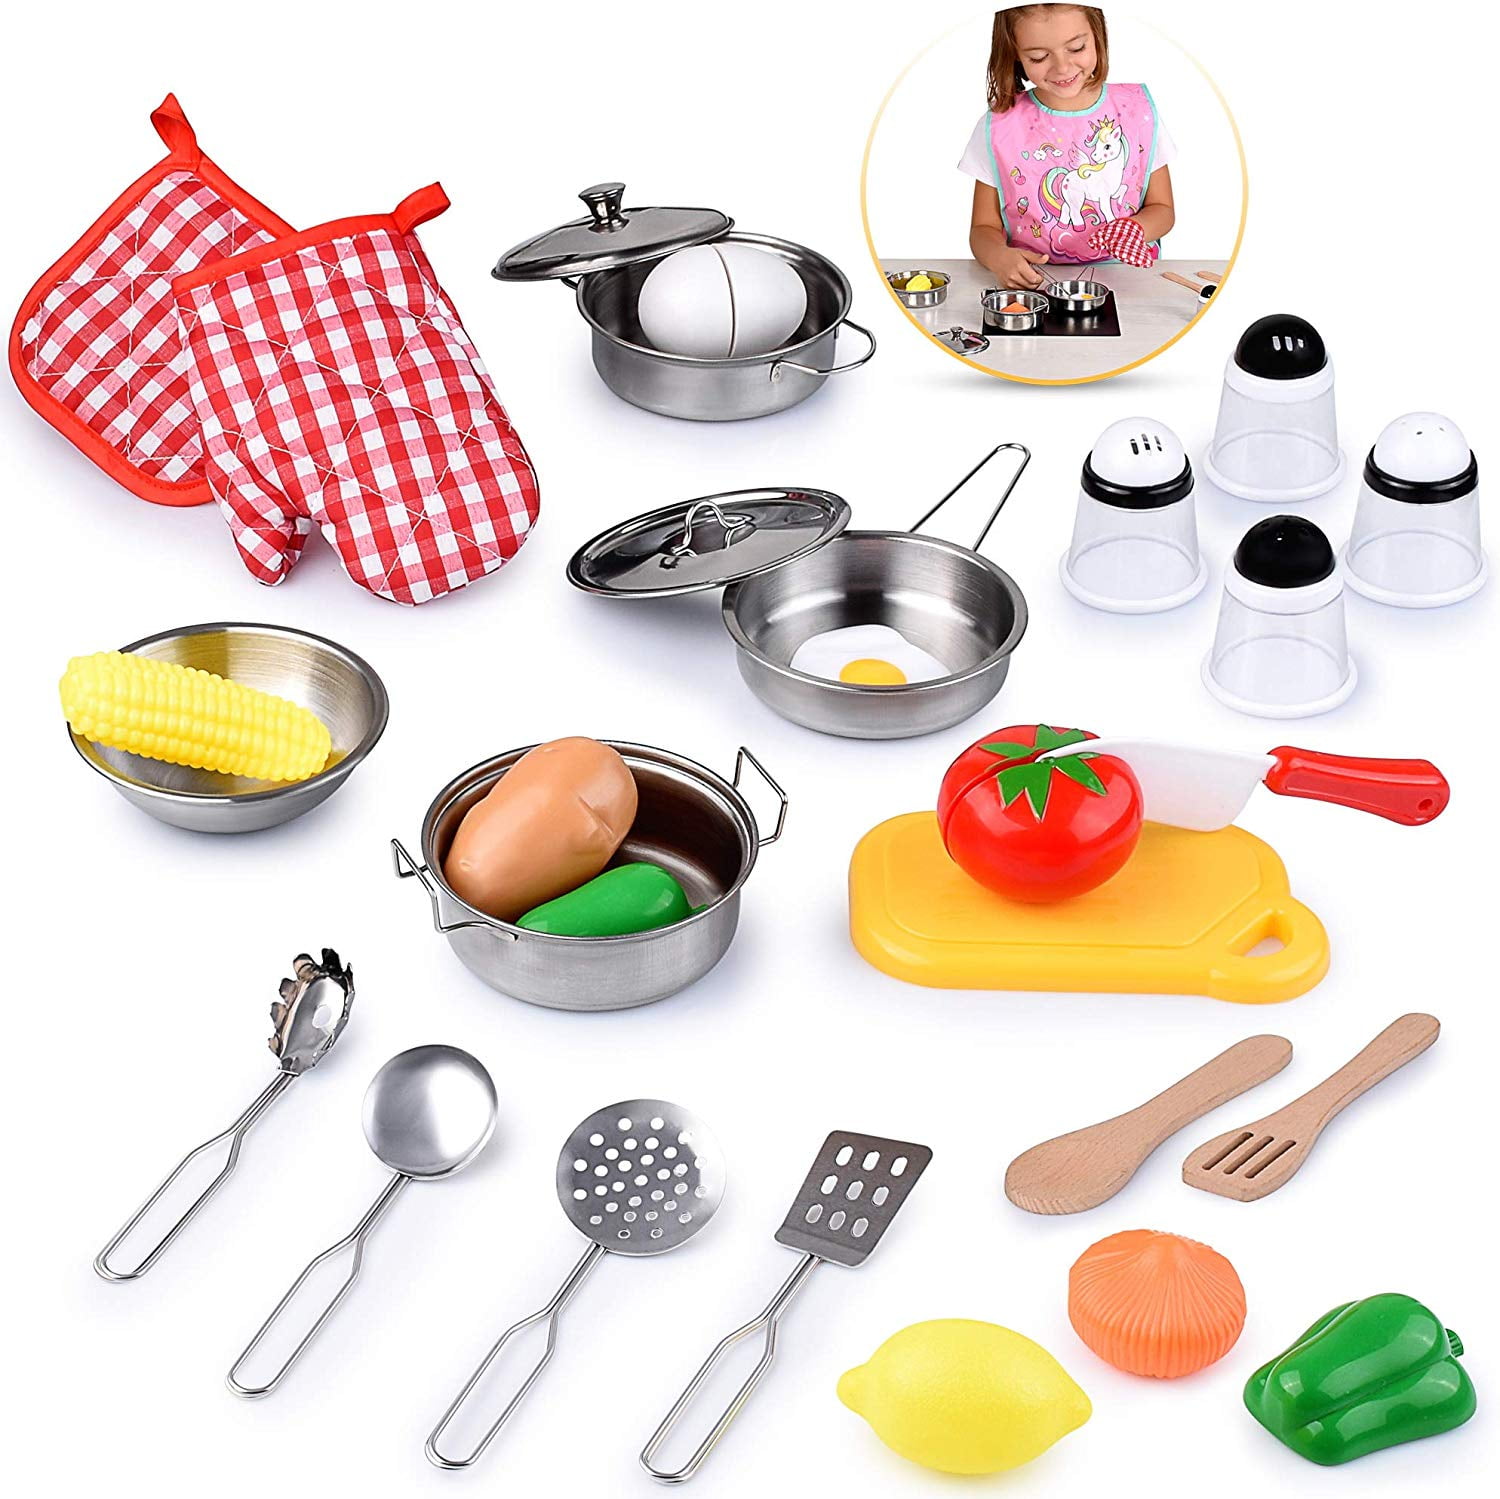 Children Kids Play Toys Kitchen Utensils Pots Pans Dishes-Co.AU Food X9V8 